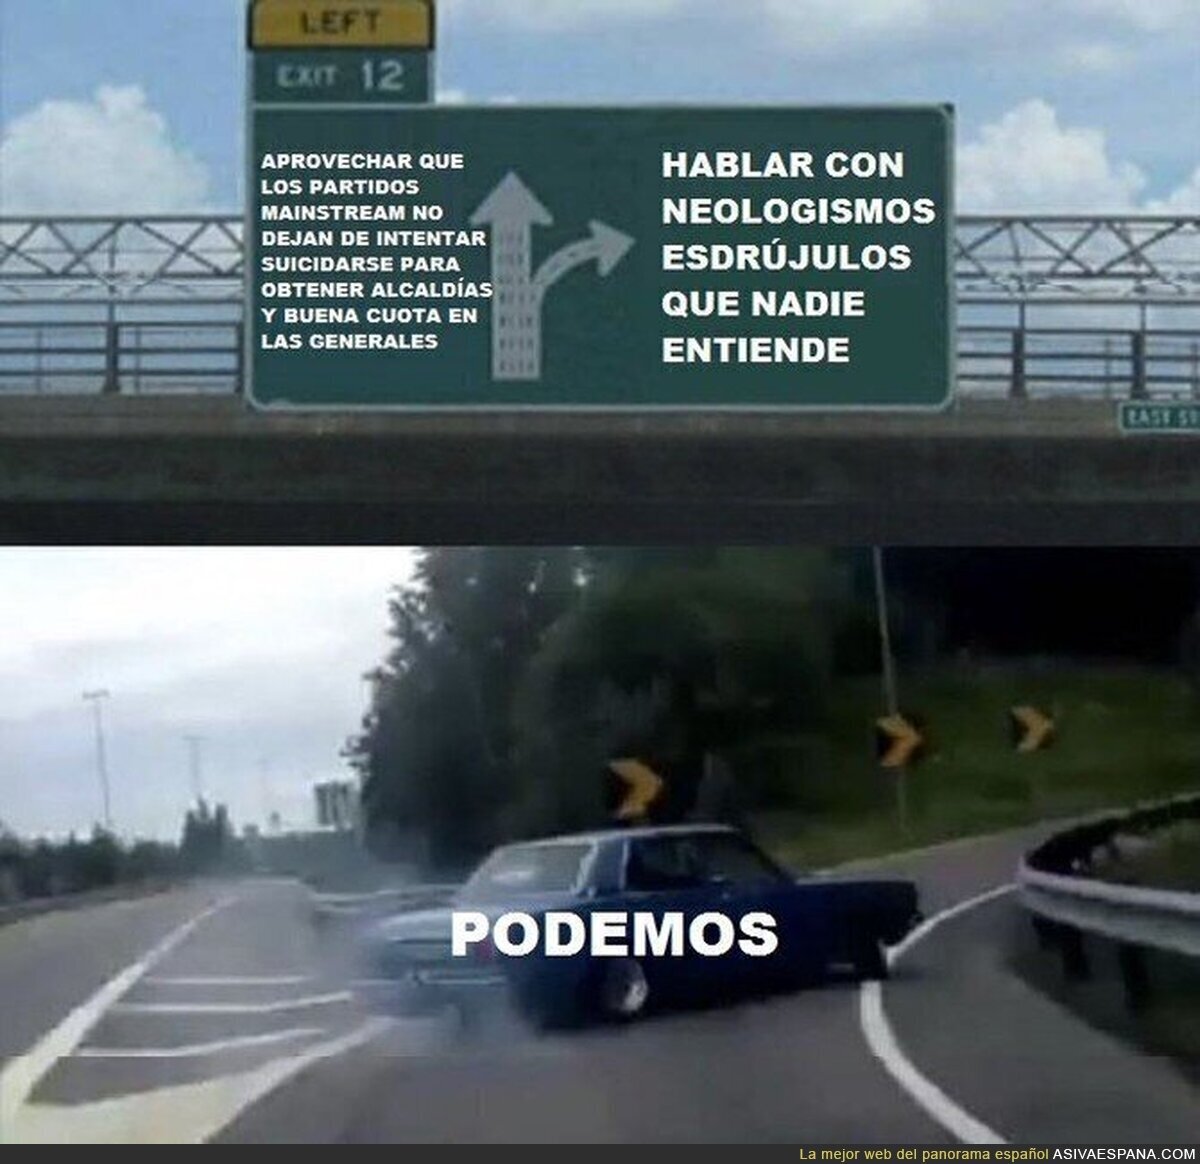 La curiosa táctica de Podemos